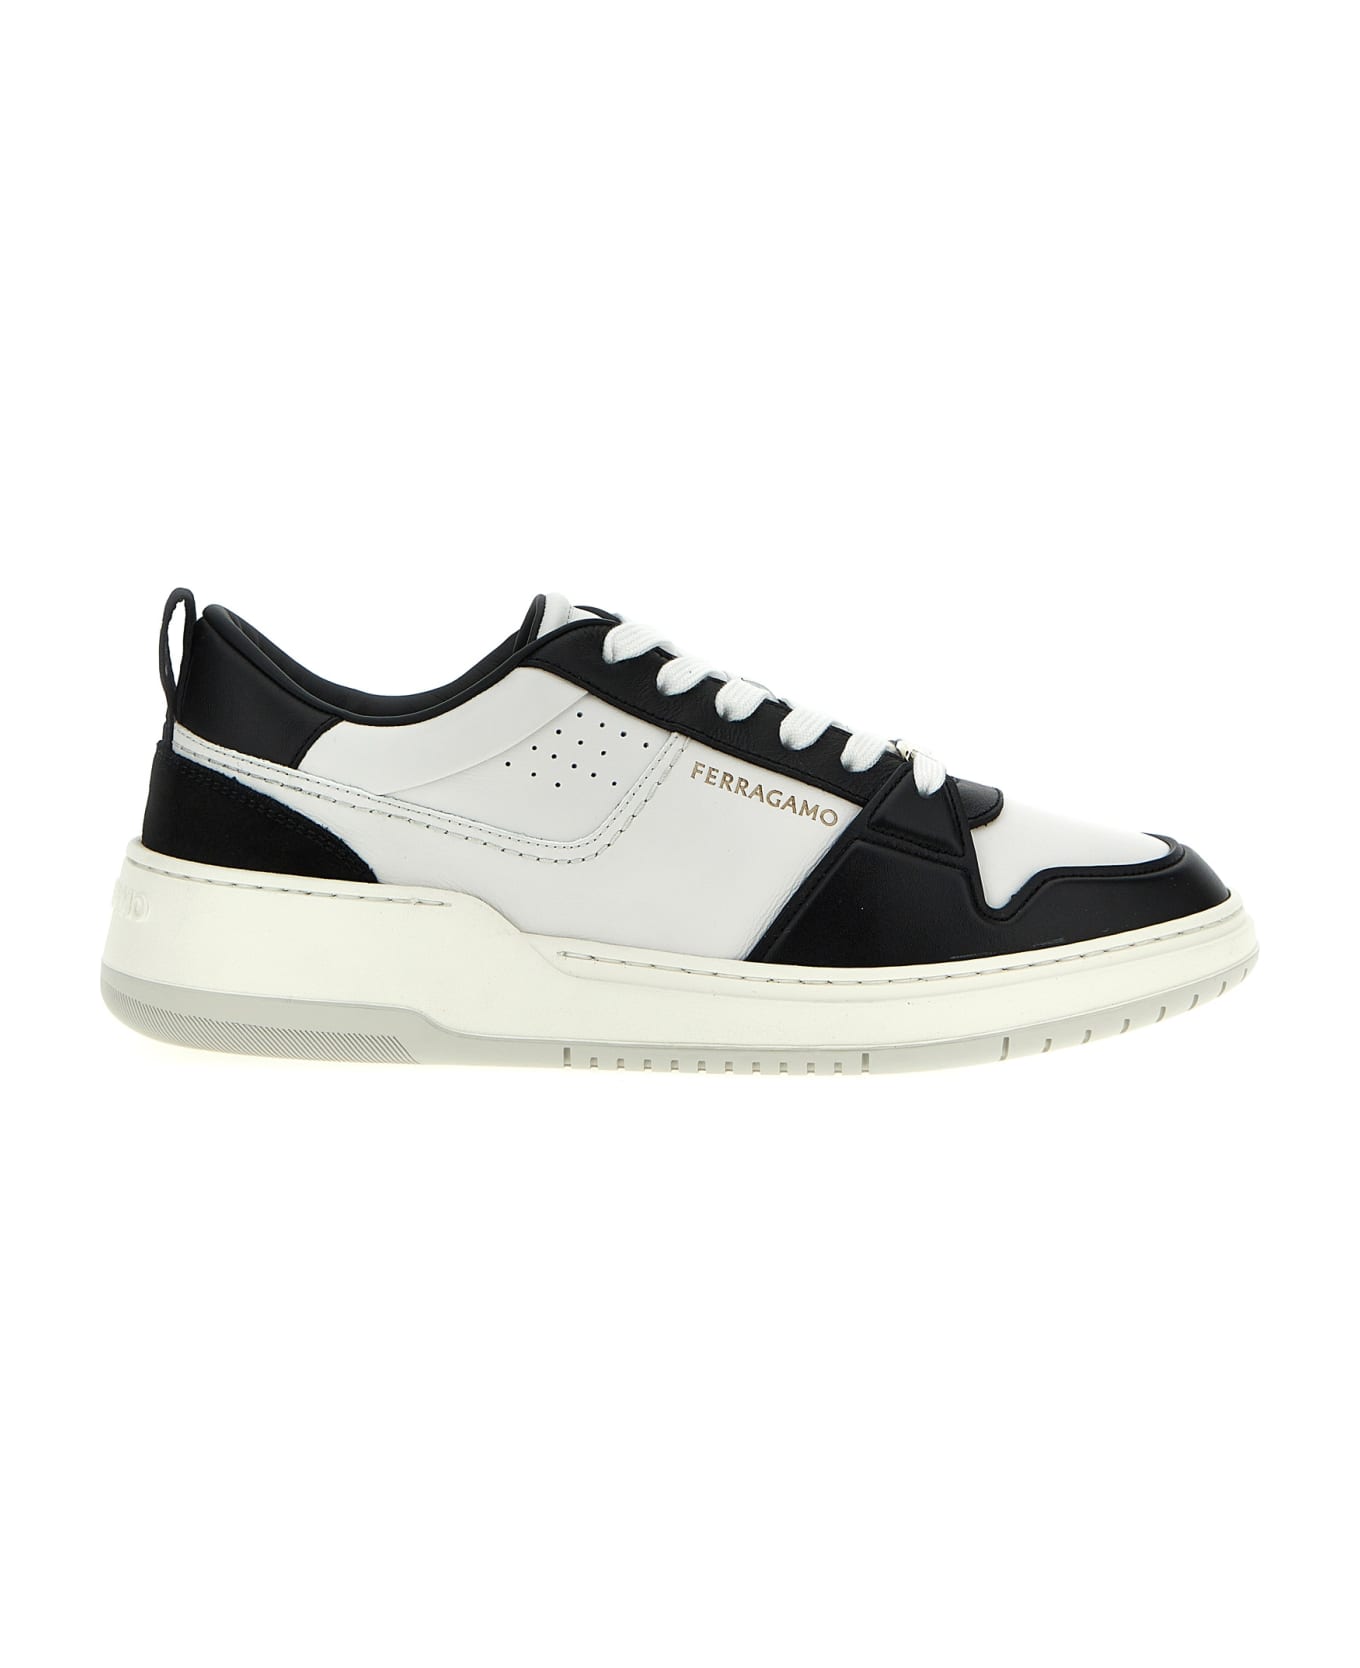 Ferragamo Two-tone Leather Sneakers - White/Black スニーカー